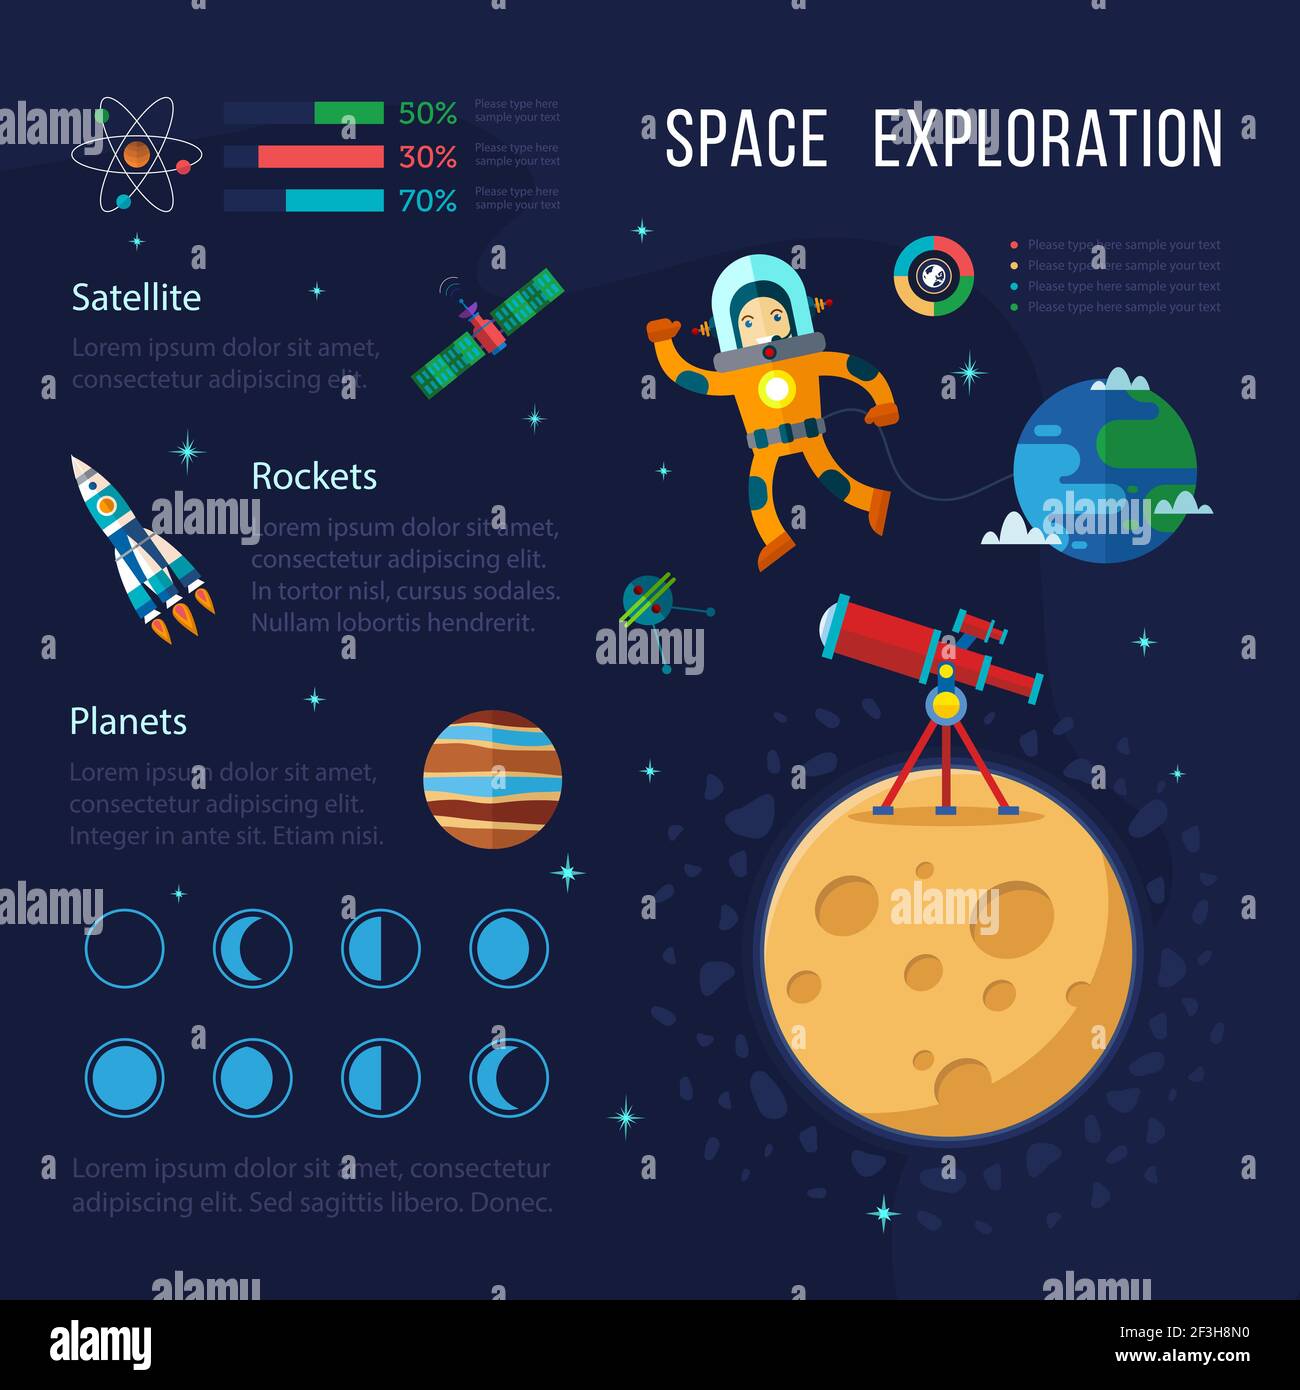 Space exploration design with flat vector illustration symbols of astronaut, Moon, rocket, stars. Stock Vector